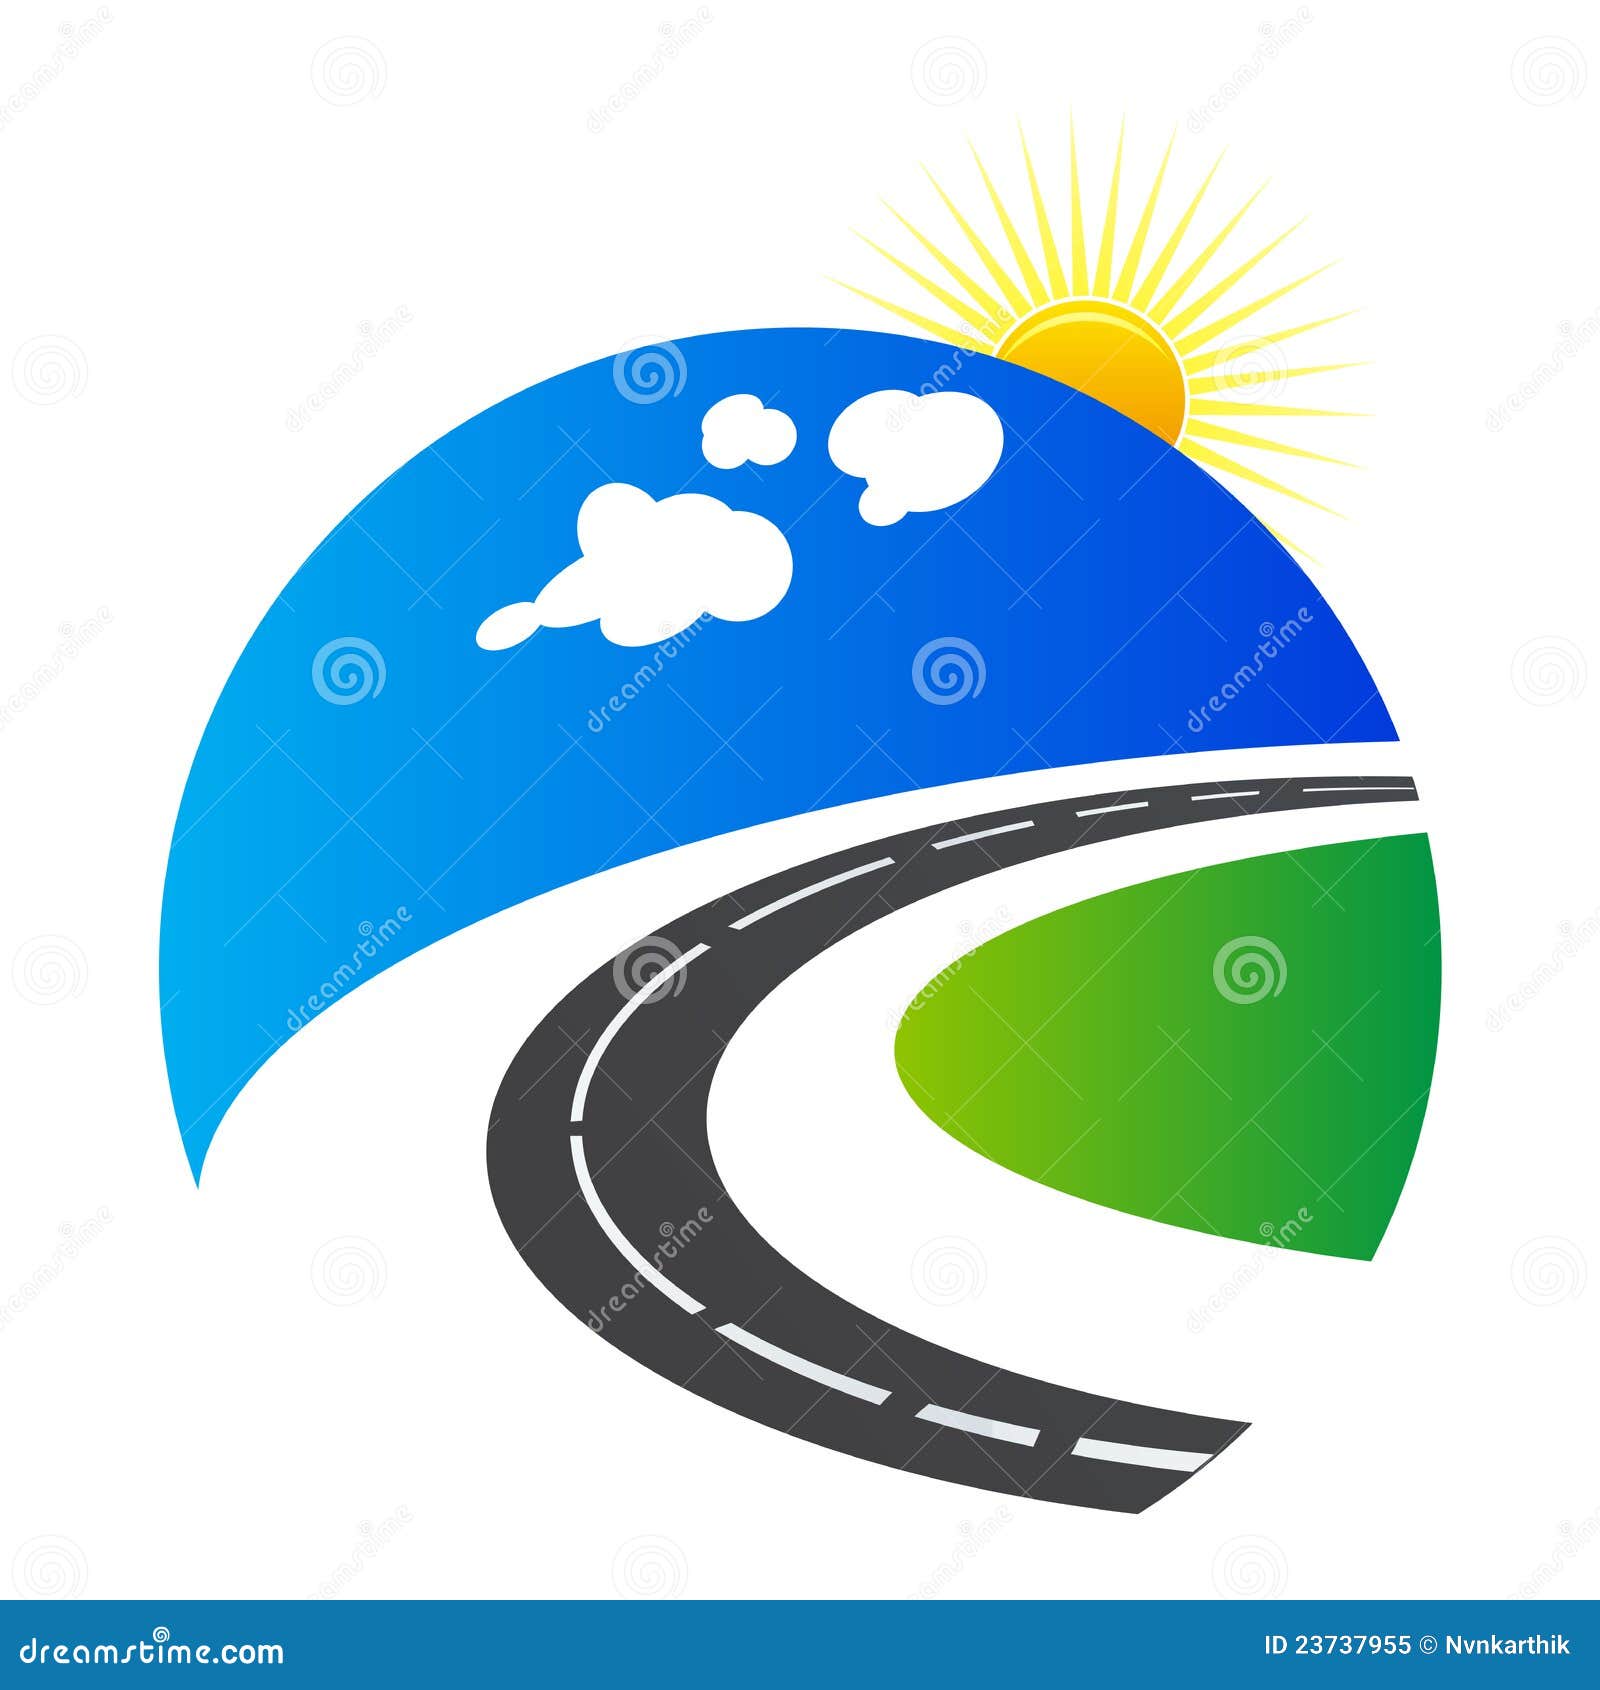 highway logo